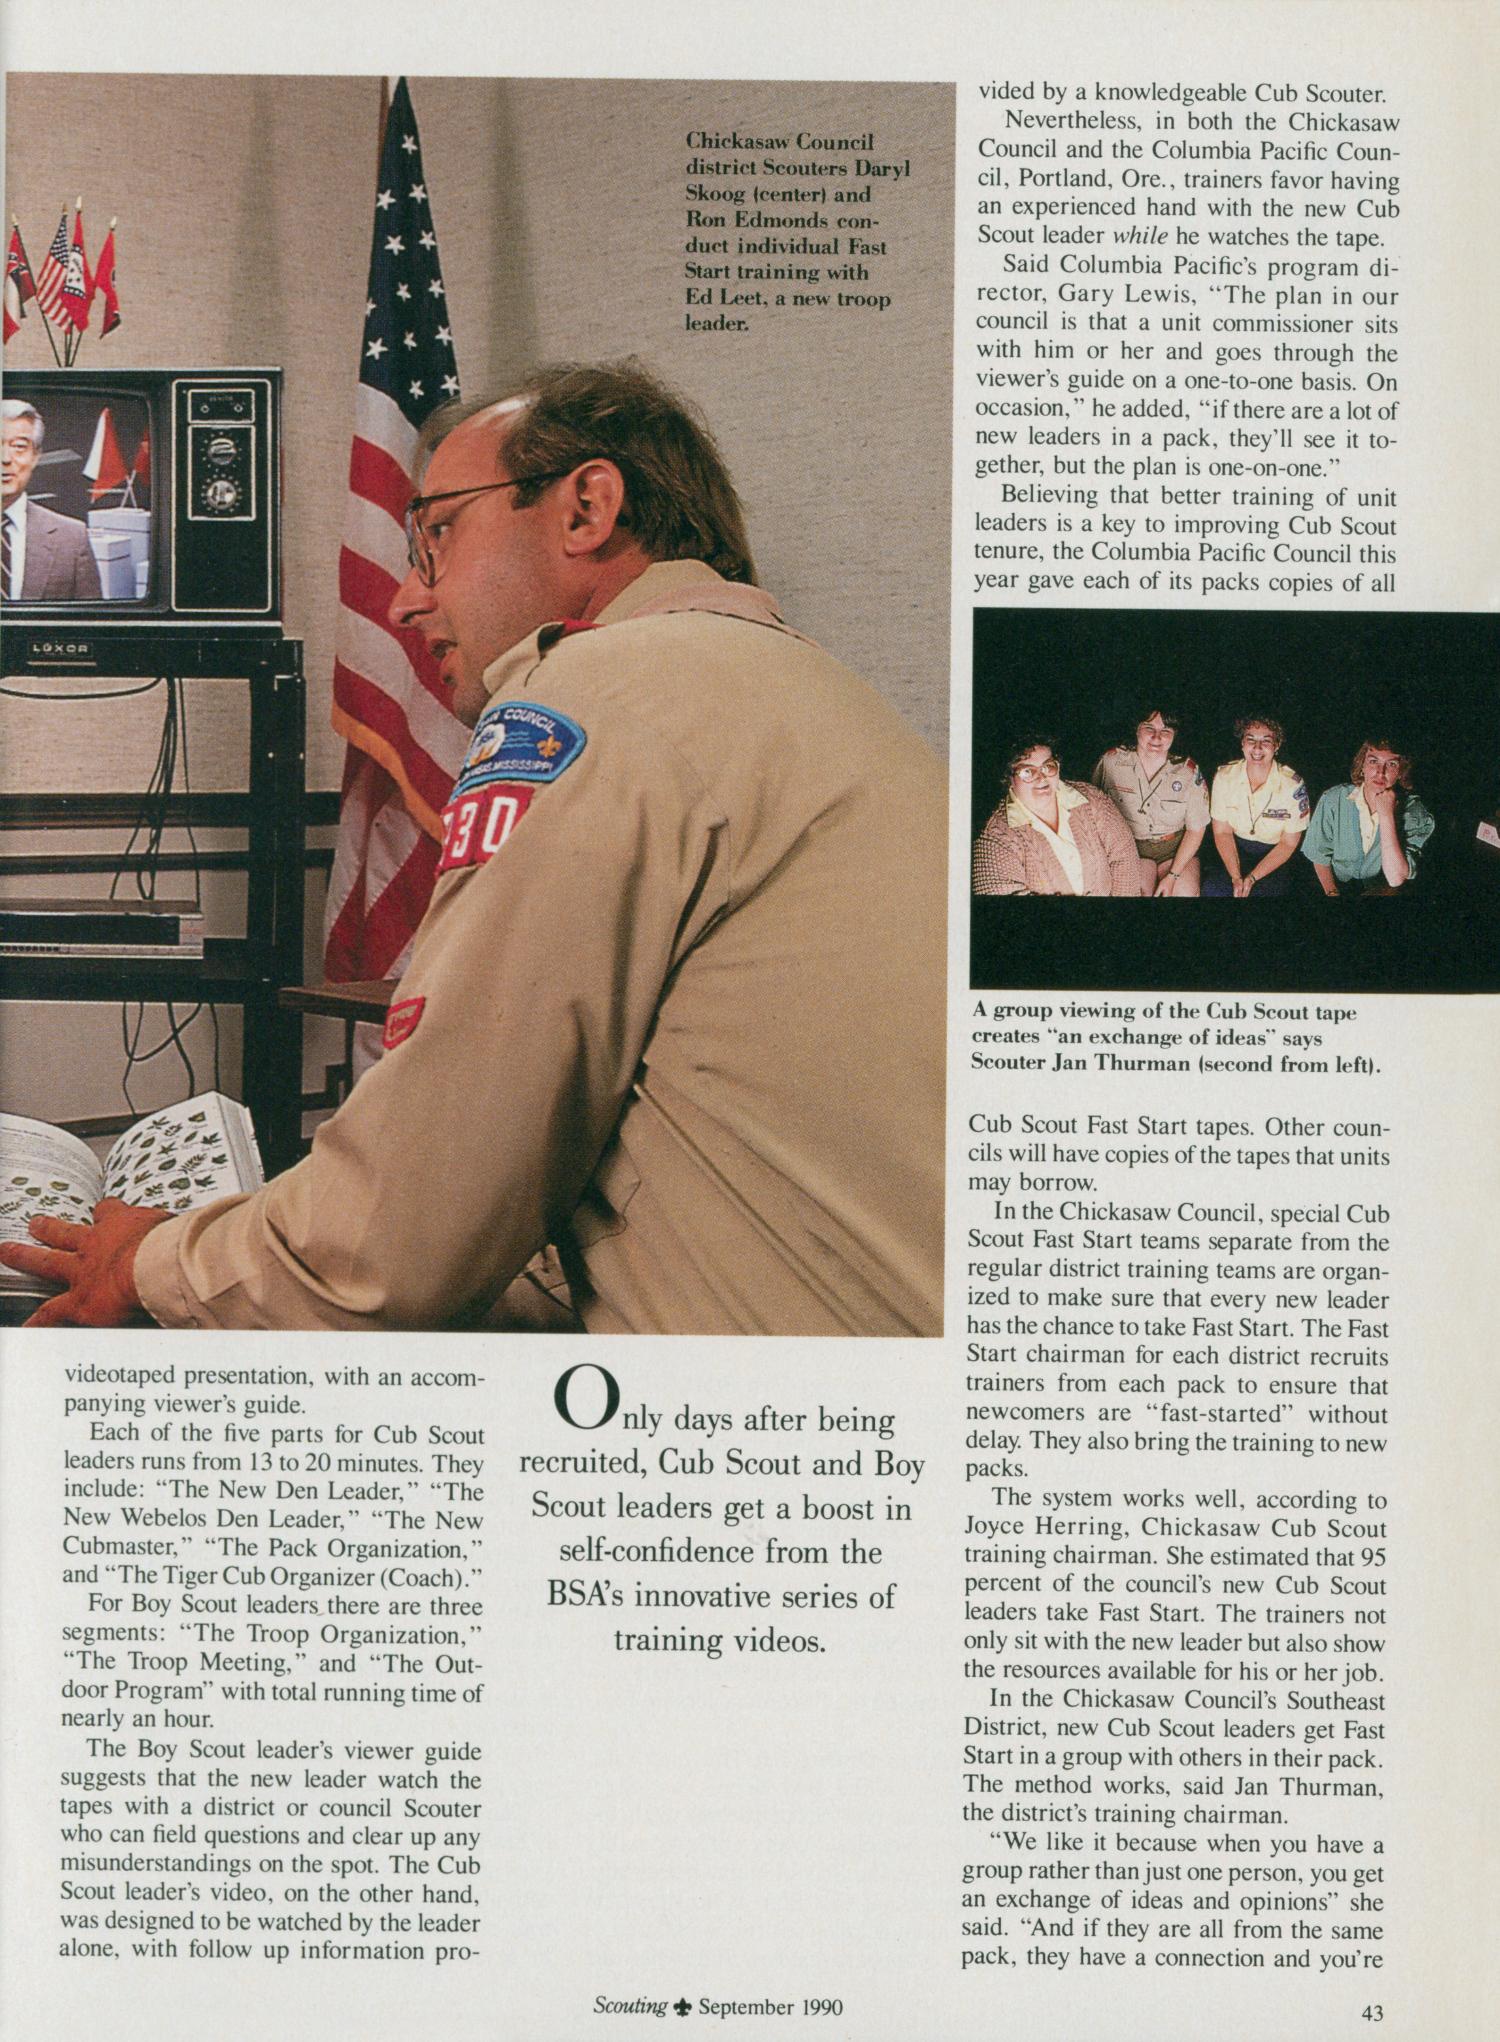 Scouting, Volume 78, Number 4, September 1990
                                                
                                                    43
                                                